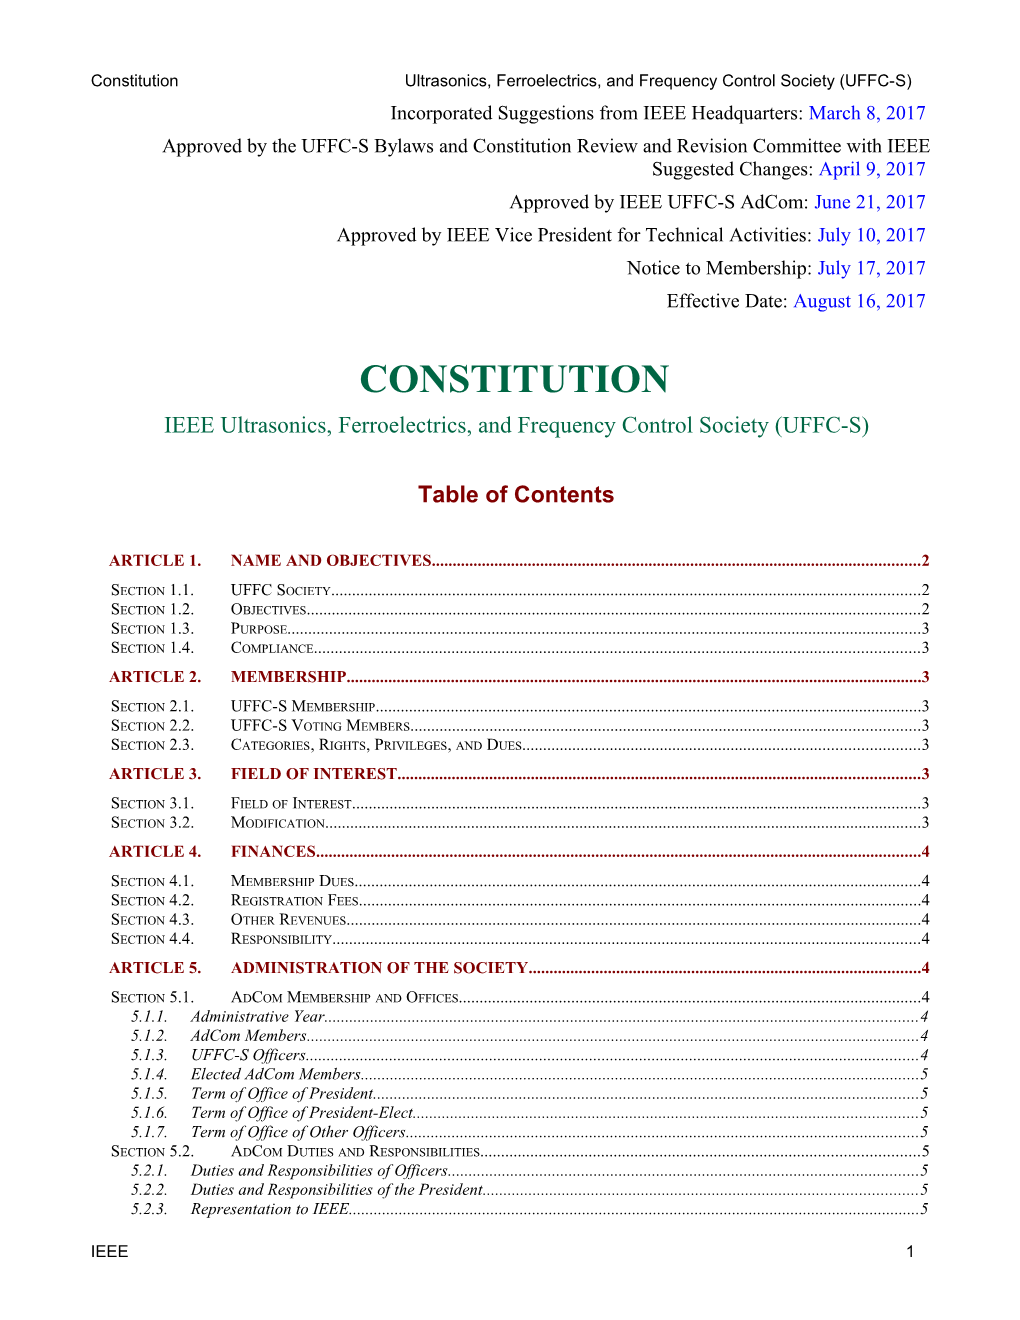 UFFC-S Constitution - Clean